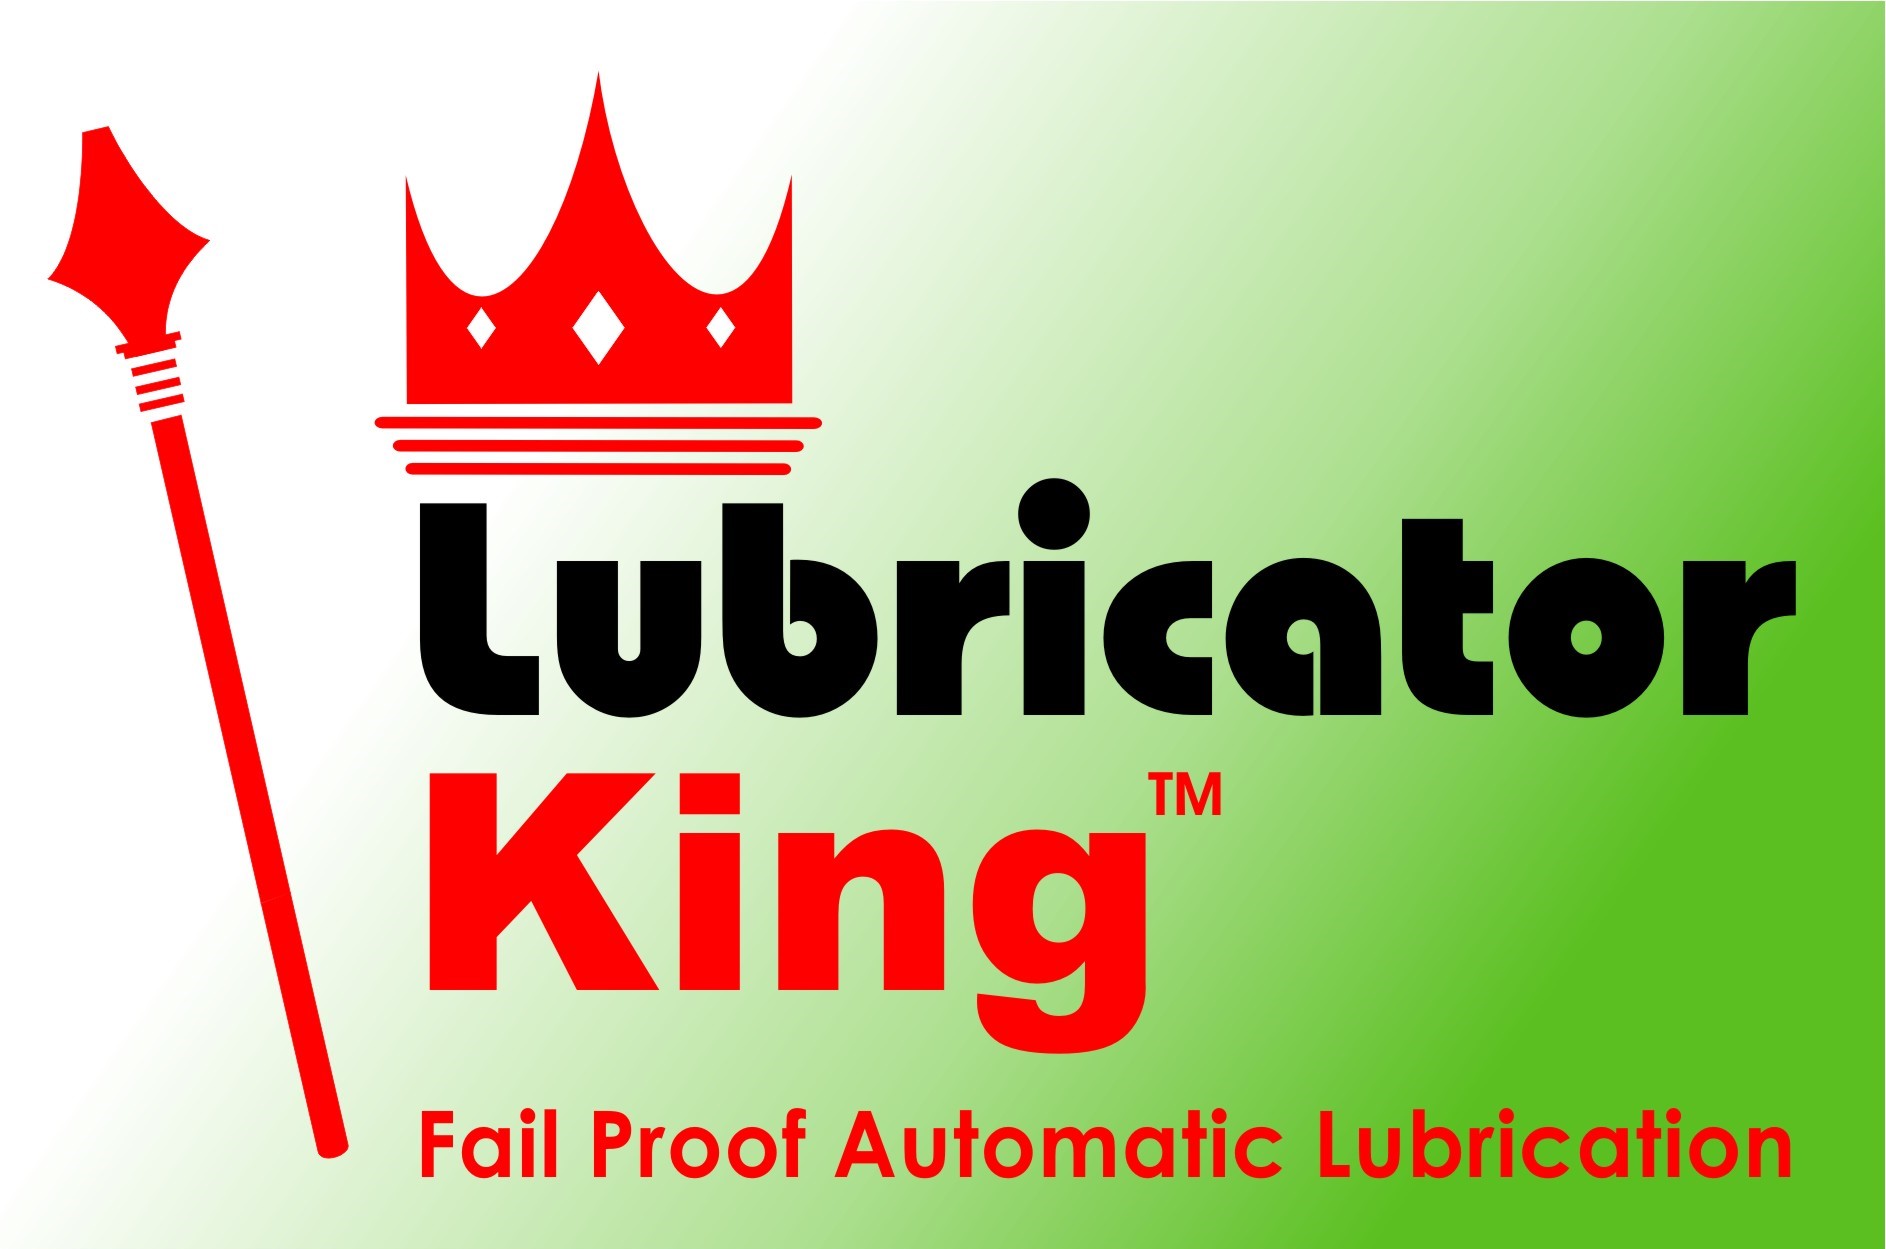 Lubricator King Sole Distributions C.C.